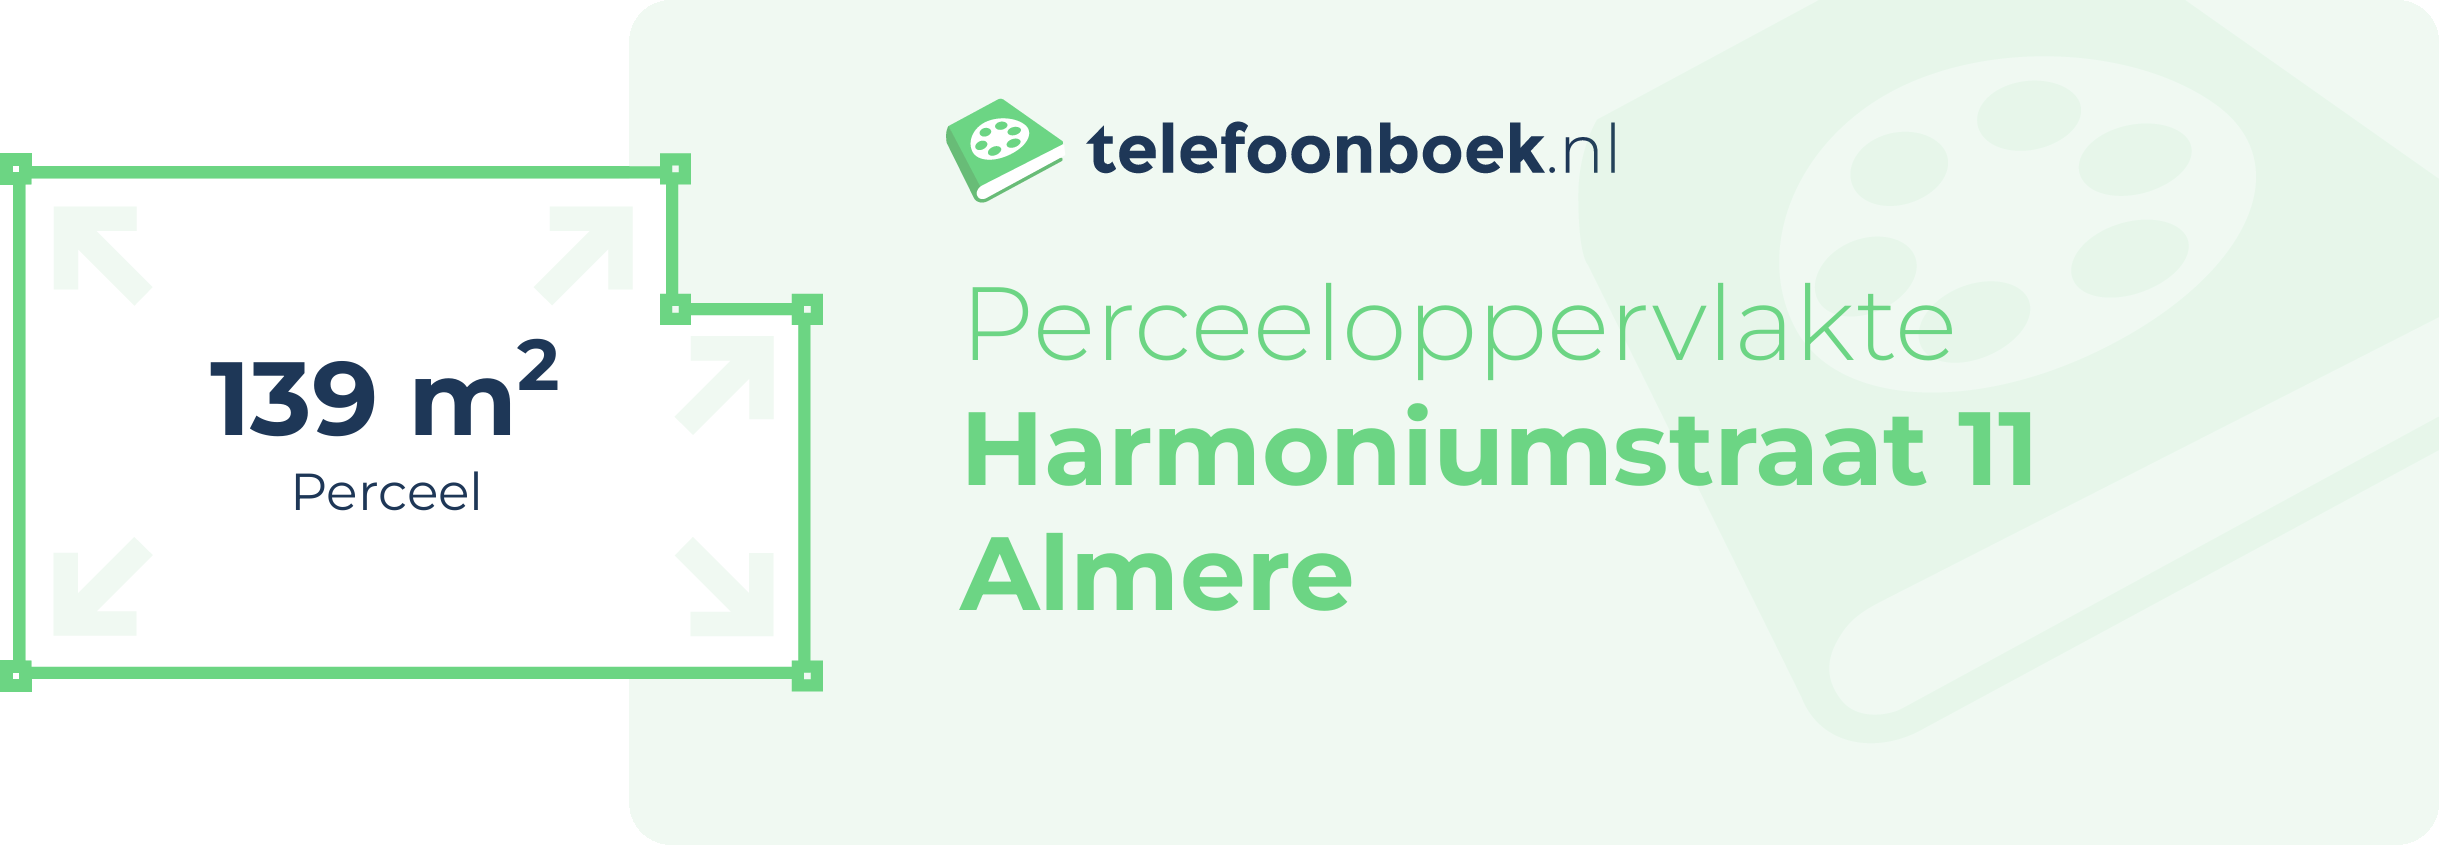 Perceeloppervlakte Harmoniumstraat 11 Almere